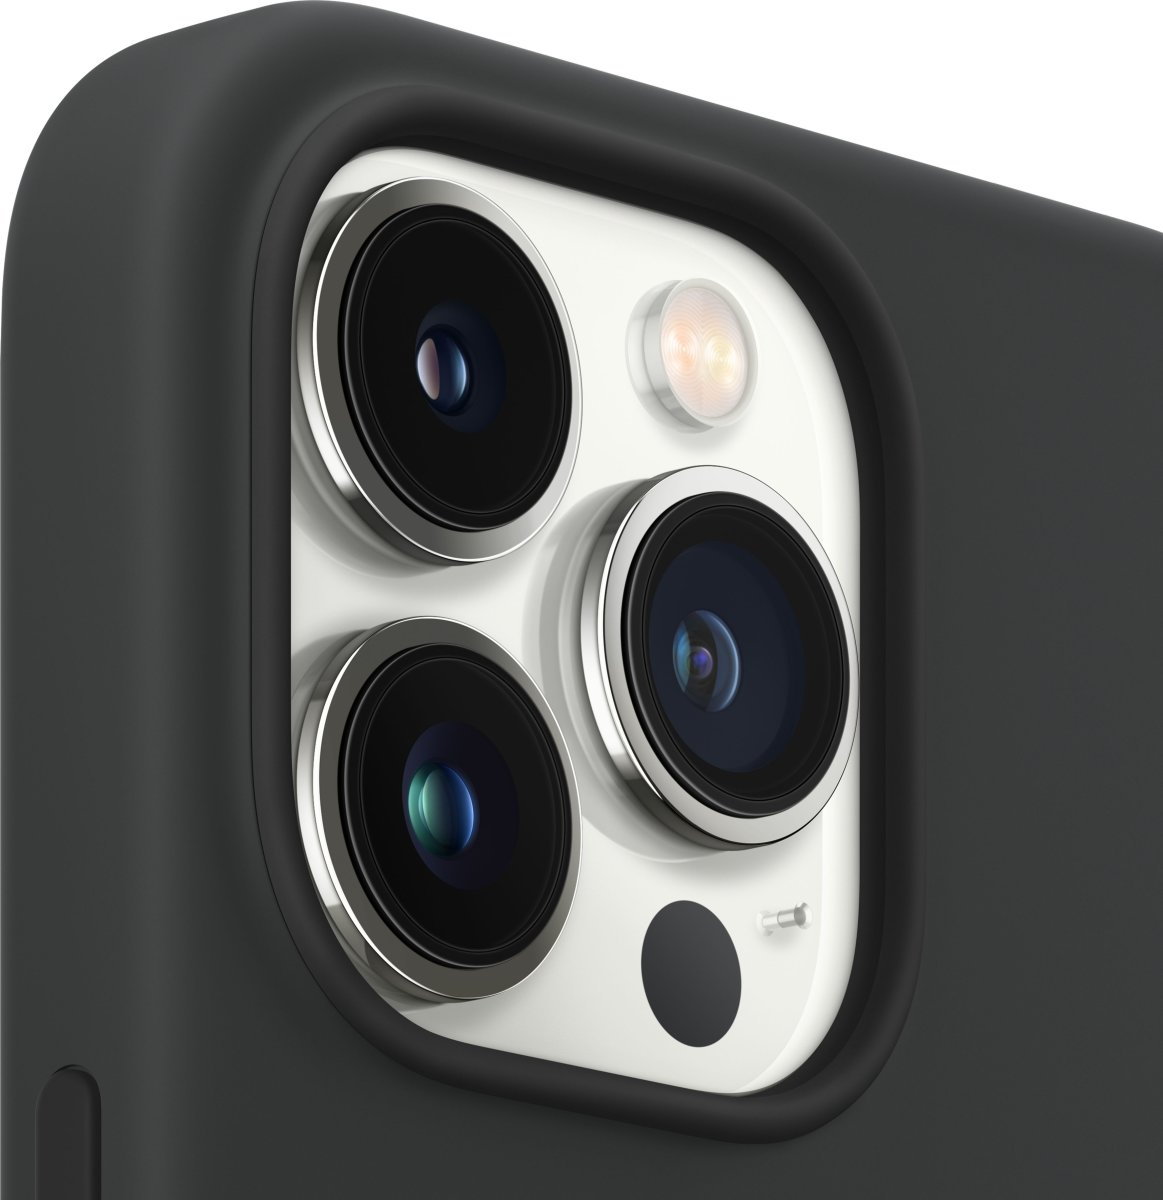 Apple iPhone 13 Pro Max silikone cover, sort